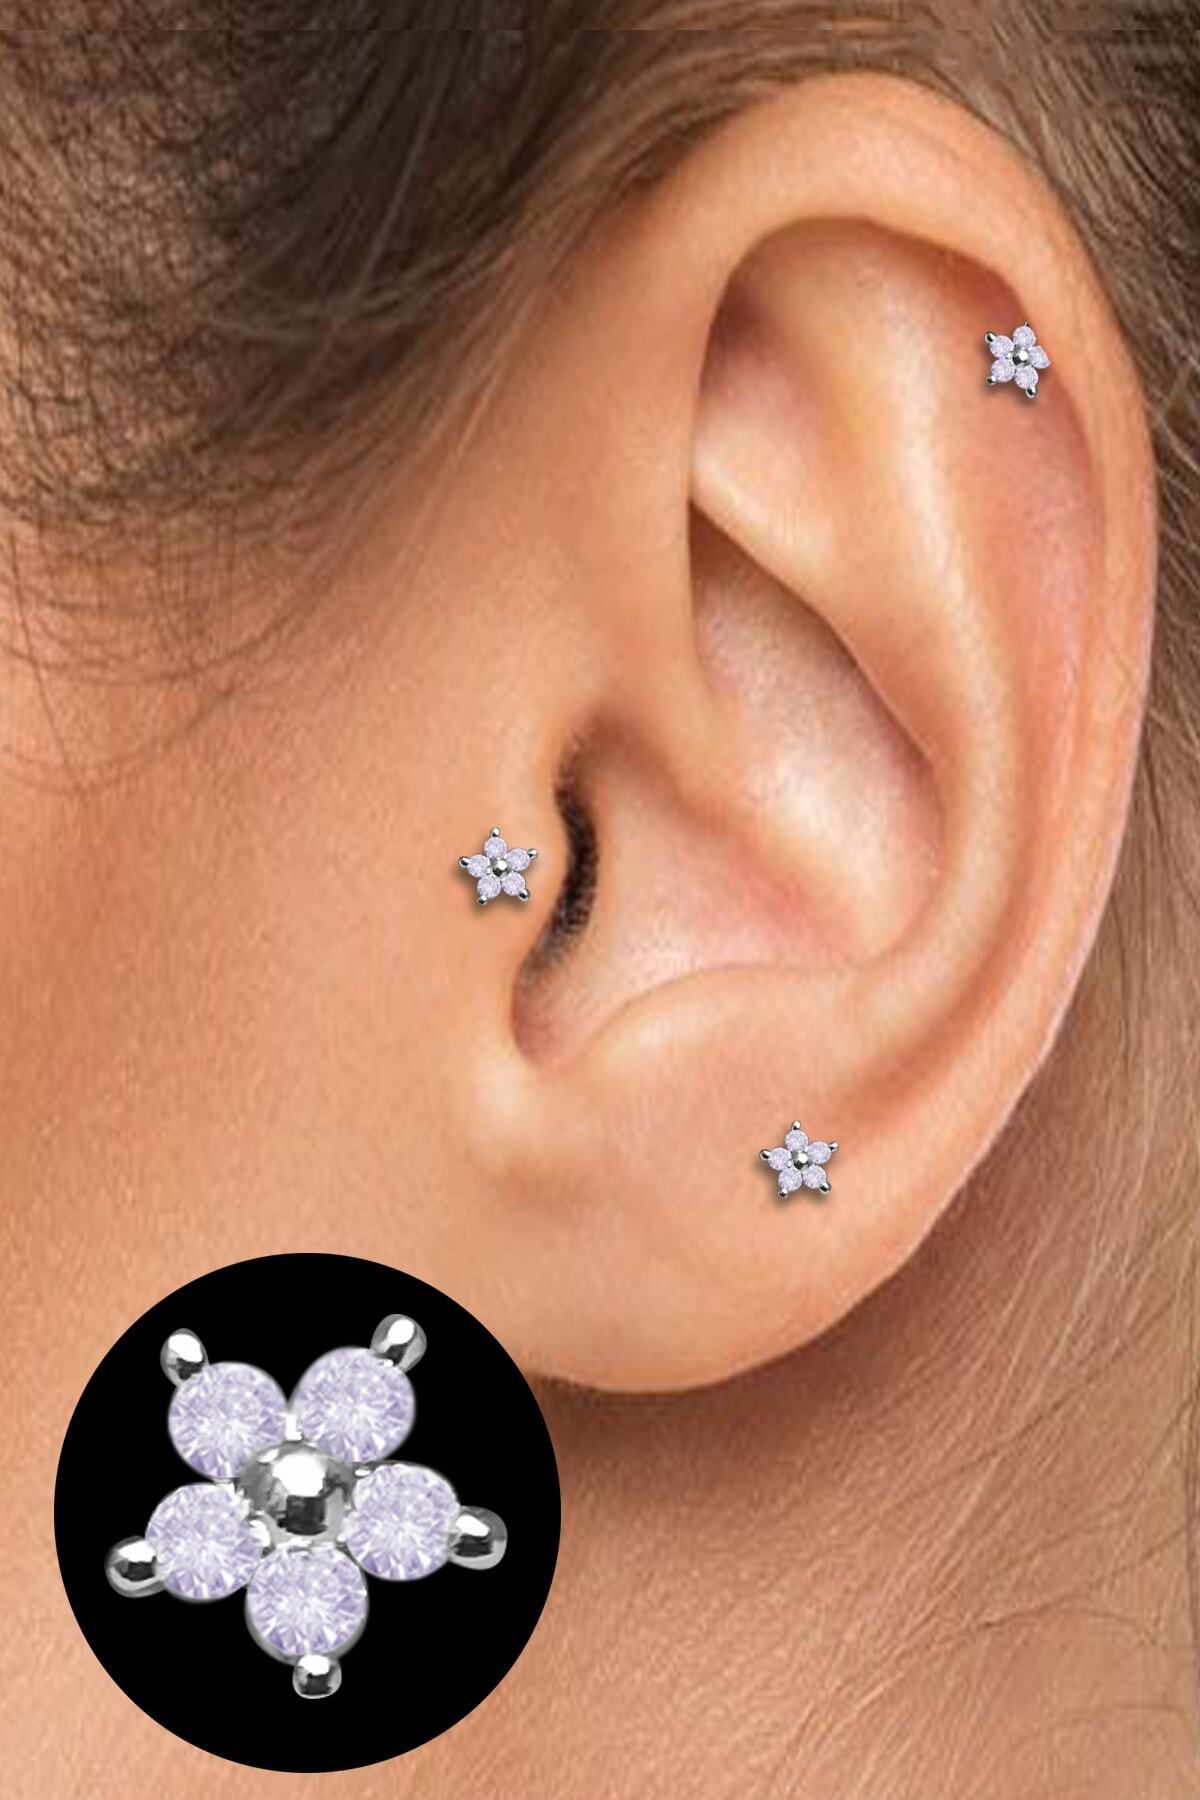 Salyangoz Company Cerrahi Çelik Kıkırdak Helix Tragus Piercing Mini Boy Çiçek Figür (1 Adet) Slmncc